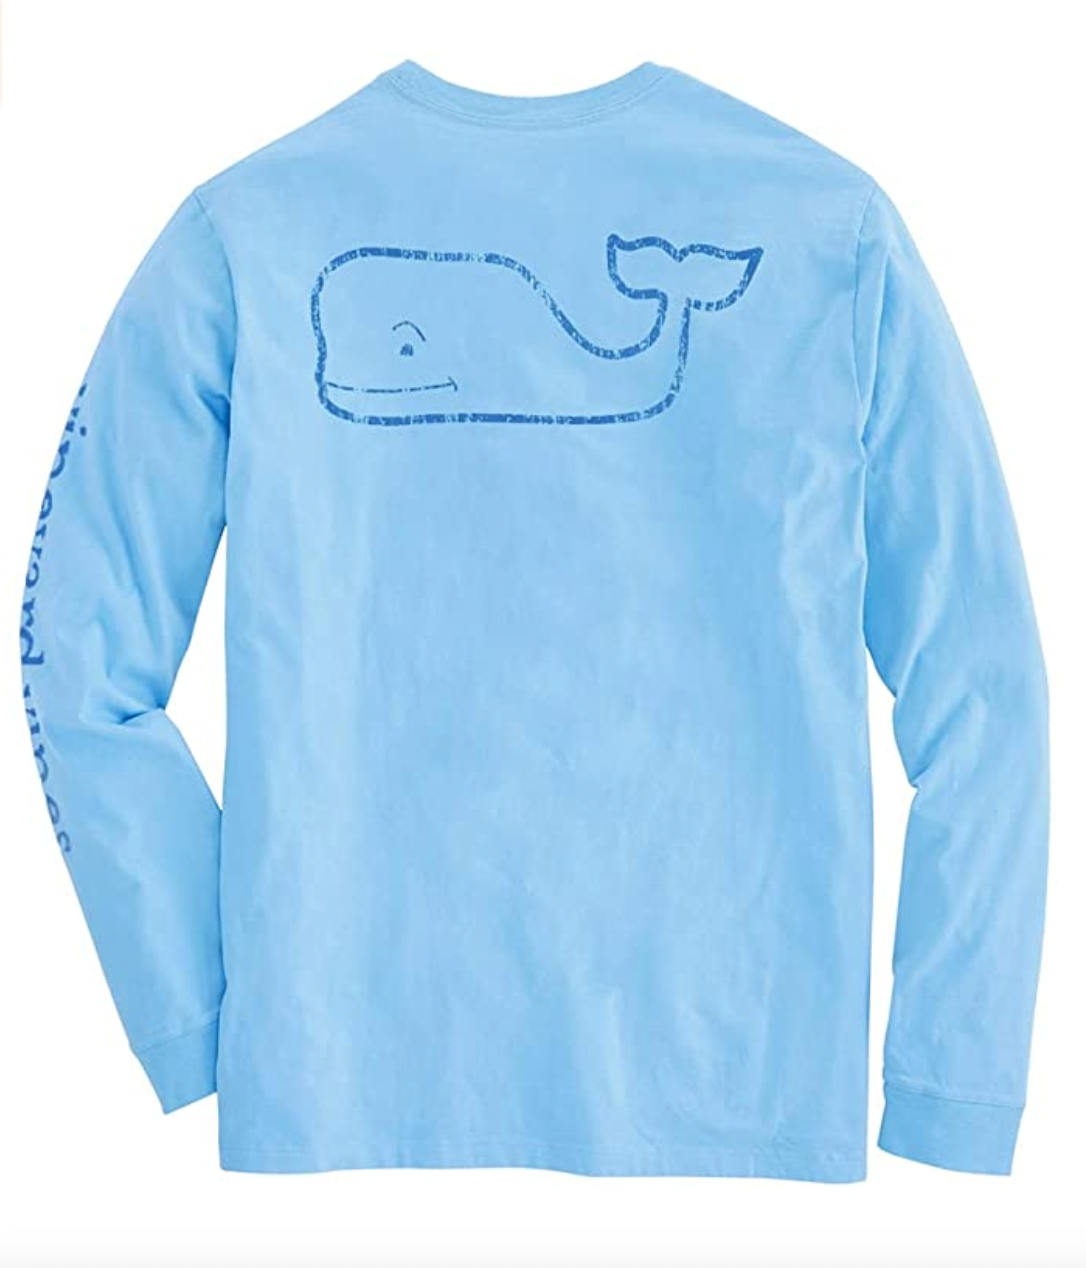 Vineyard Vines Long-Sleeve Vintage Whale Graphic Pocket T-Shirt